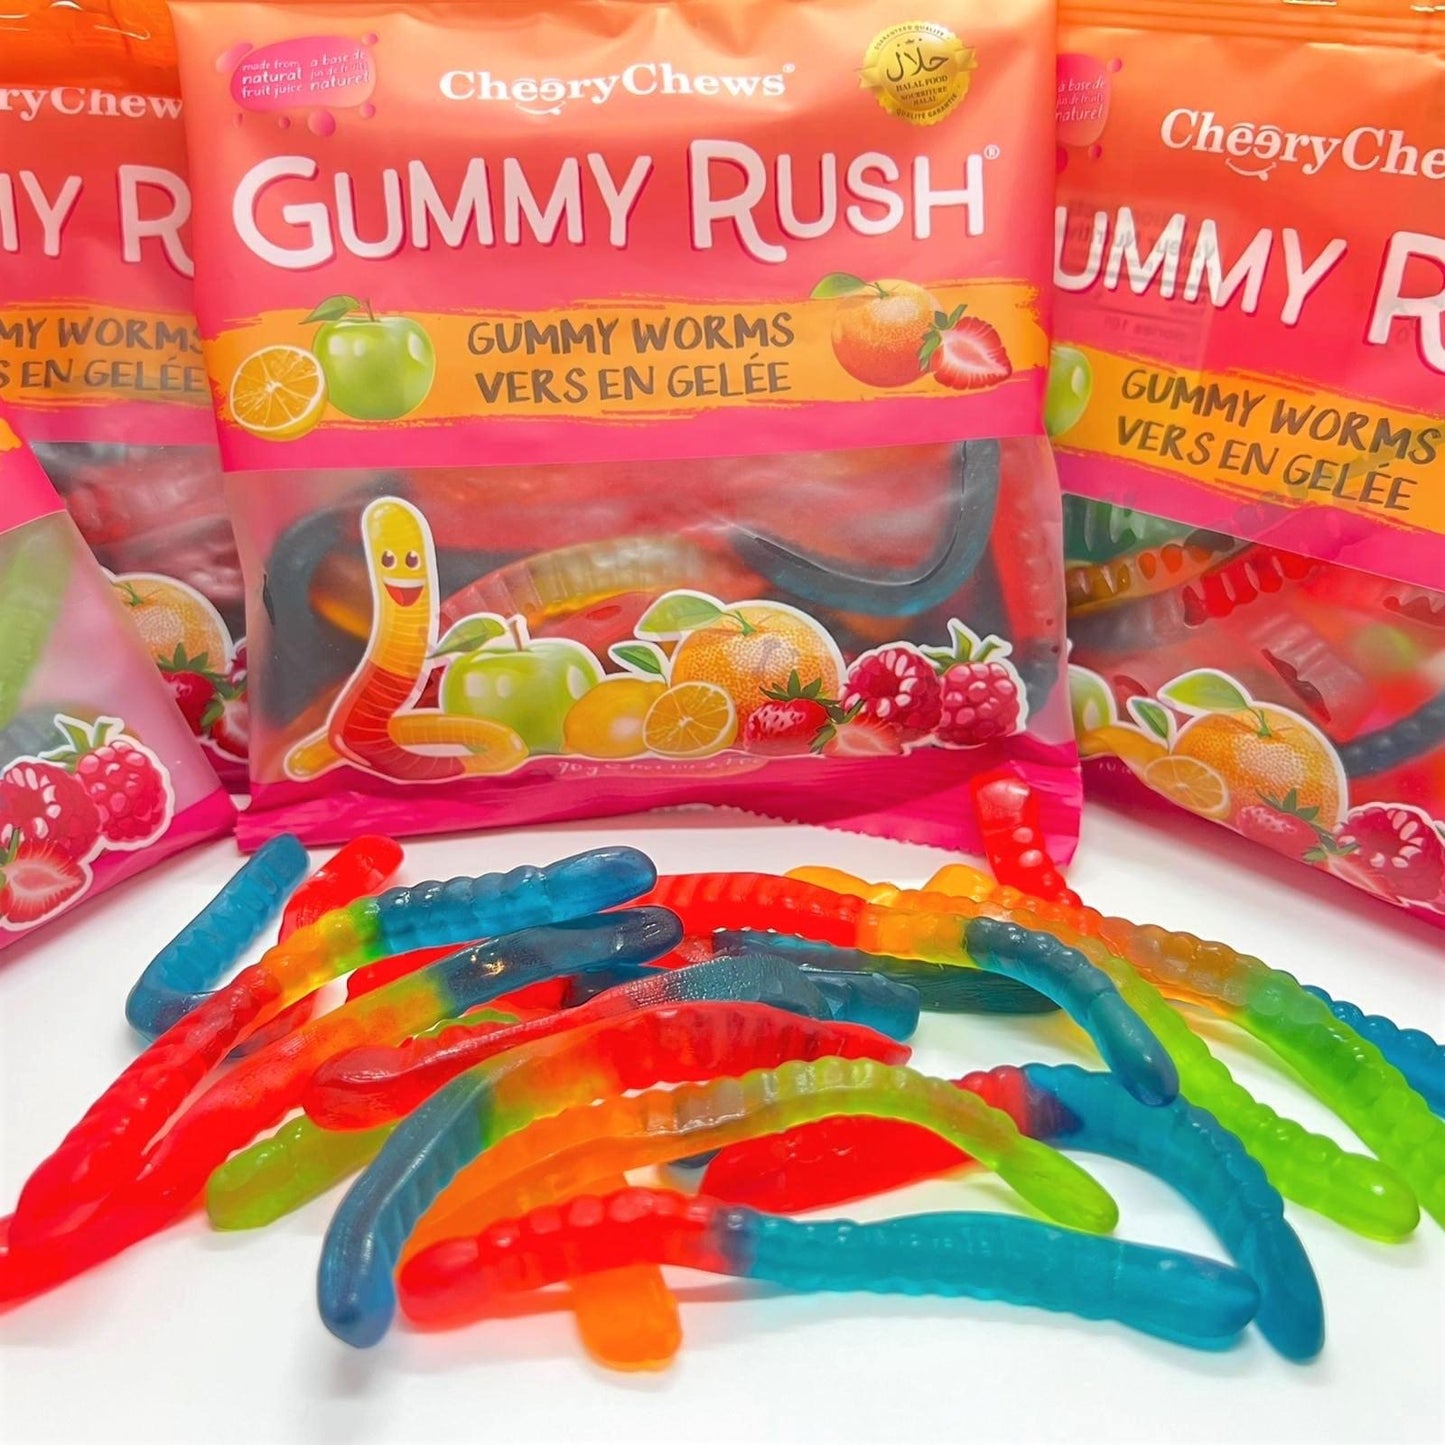 Gummy Rush Gummy Worms